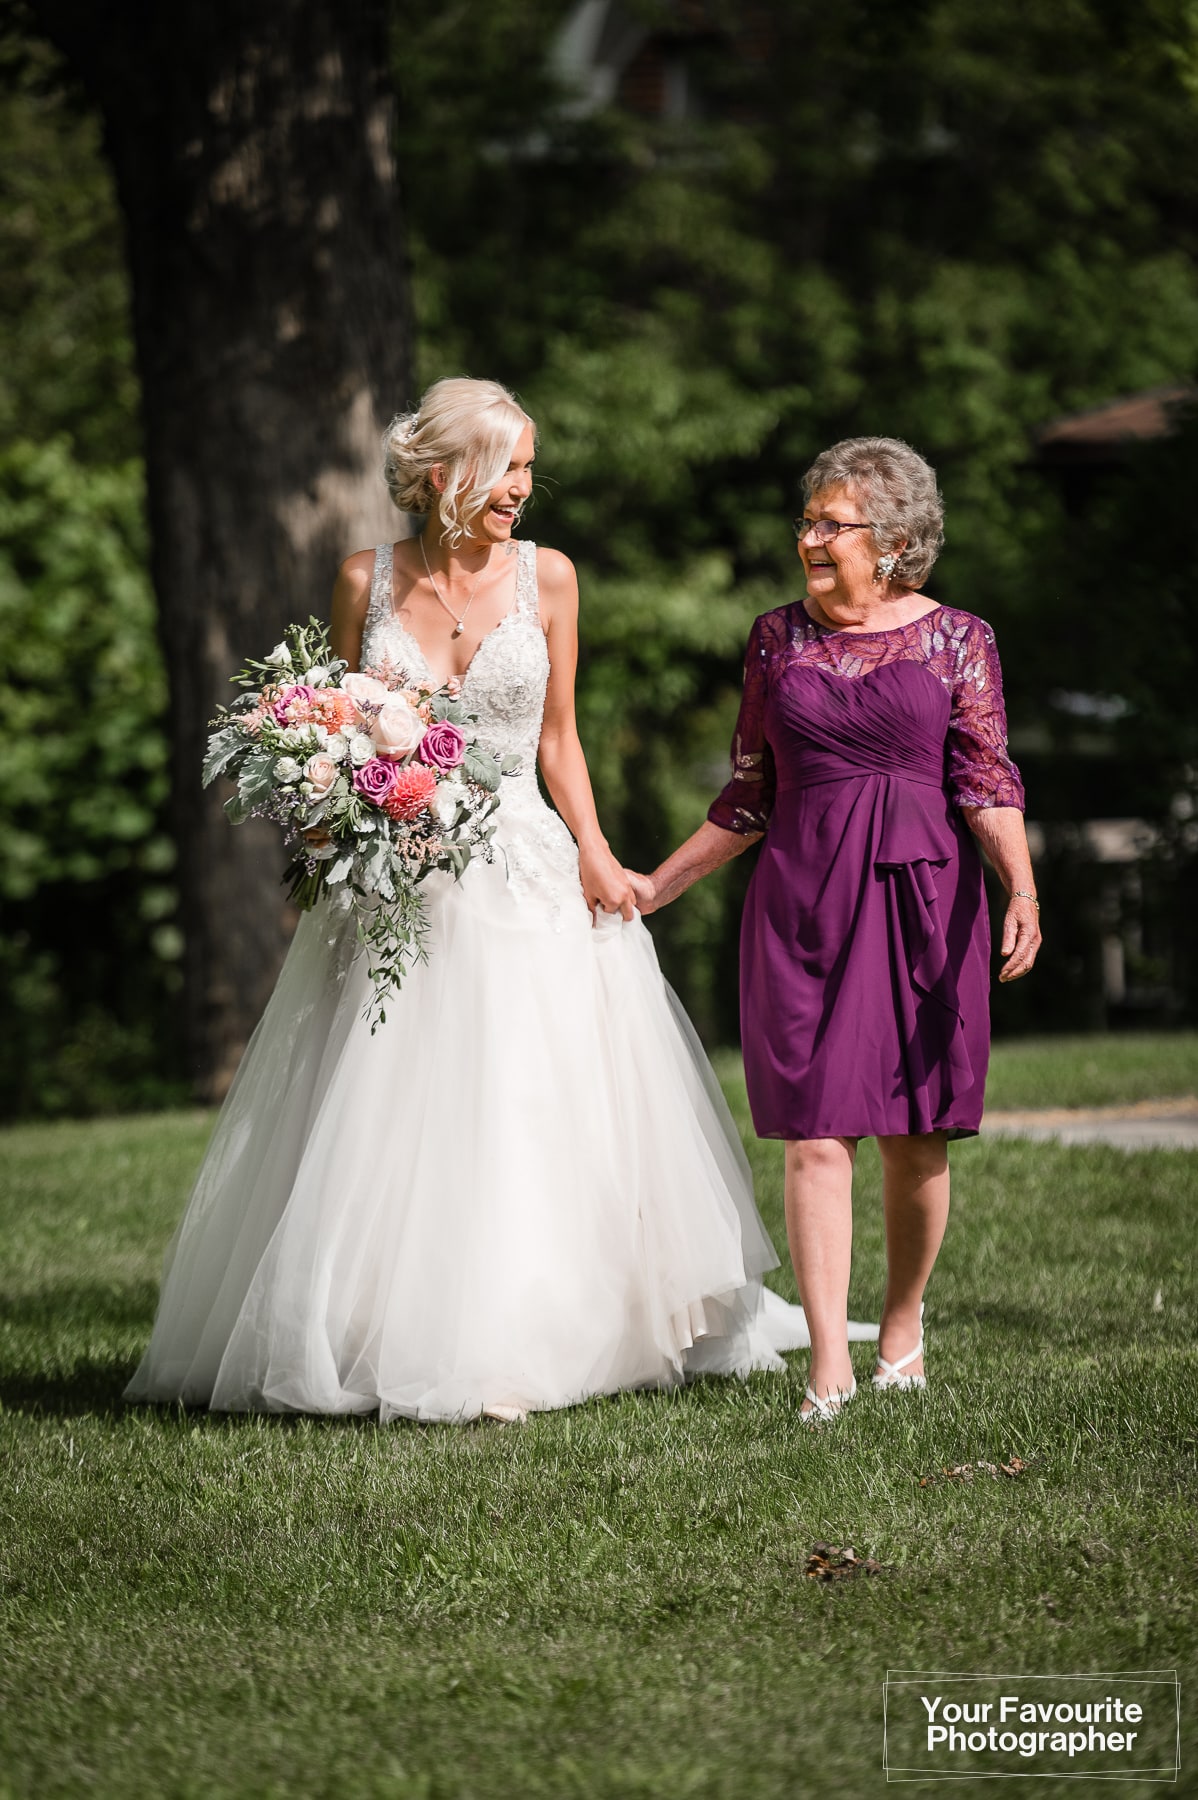 Bride and her grandma walking towards ceremony